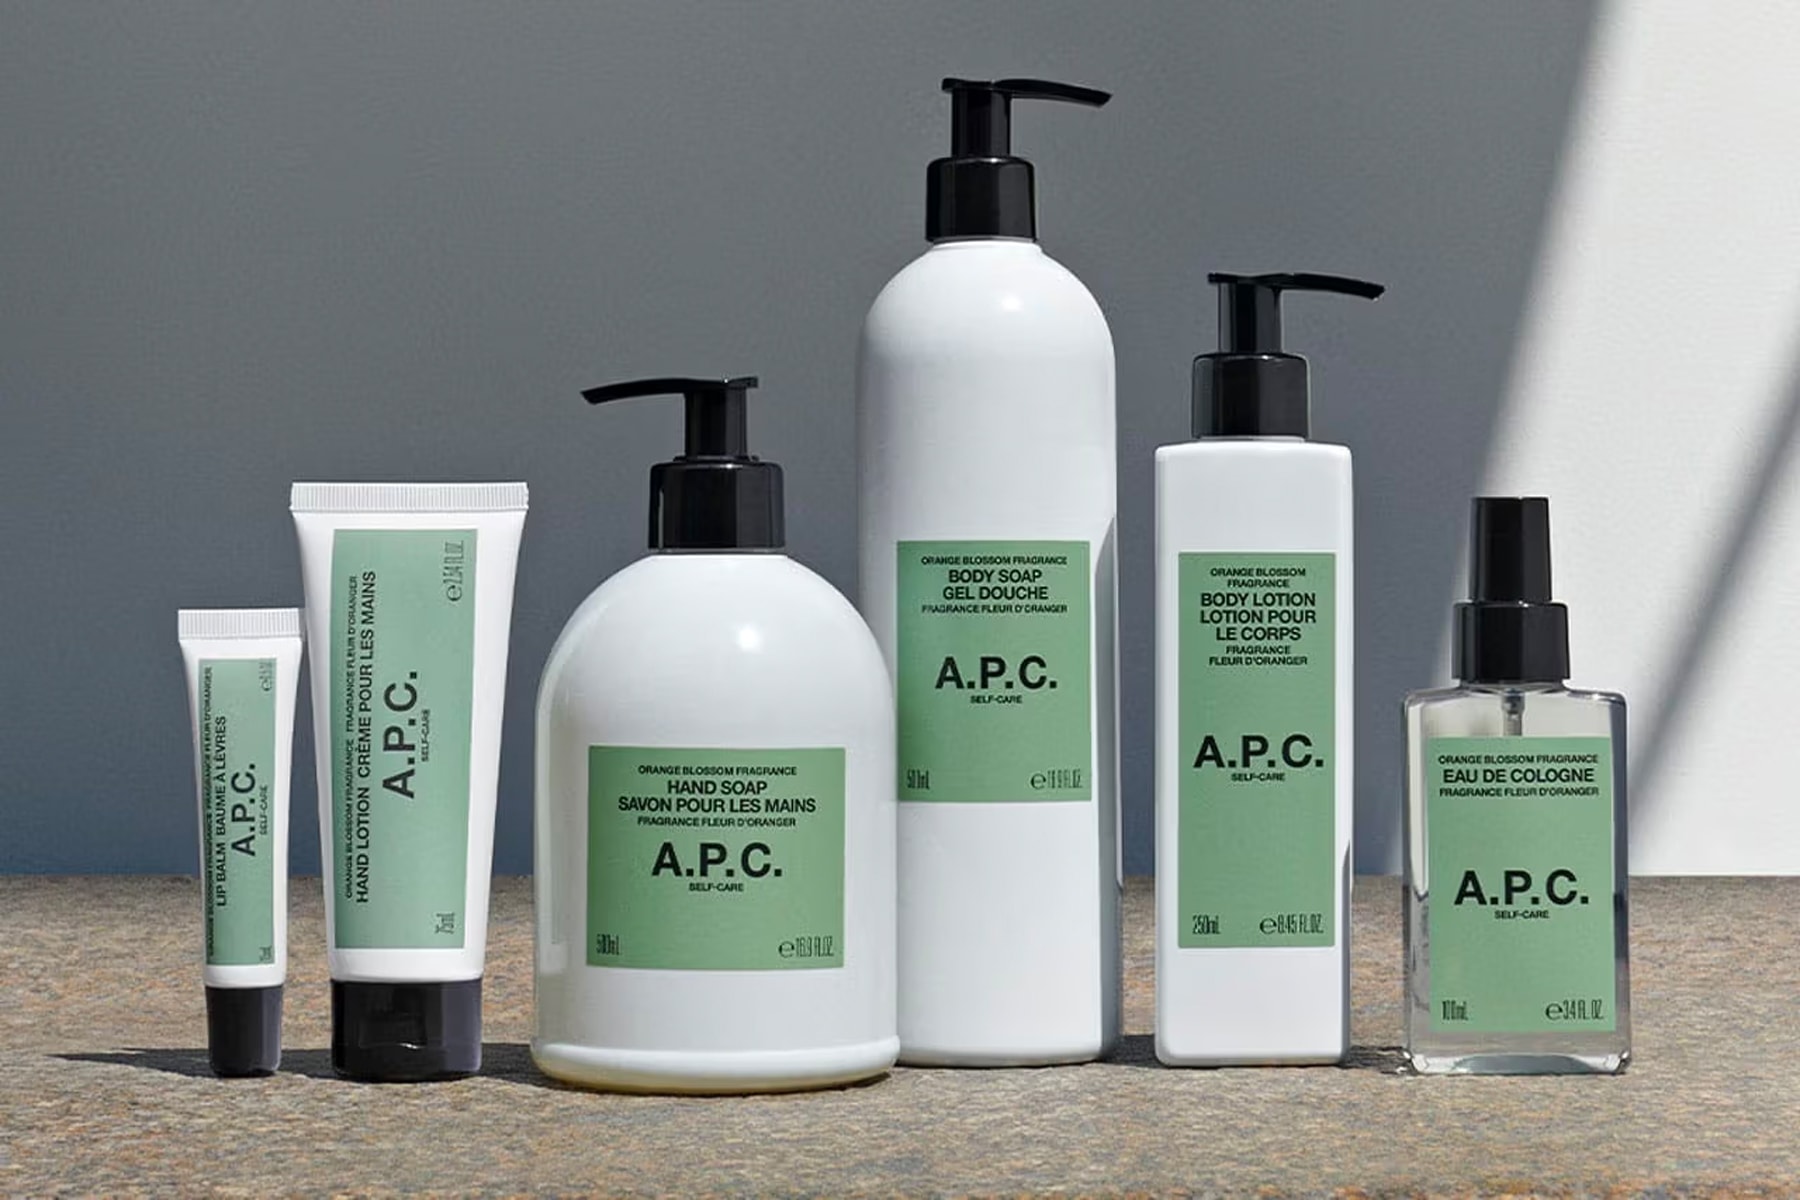 A.P.C. 推出全新護膚系列「A.P.C. SELF-CARE」